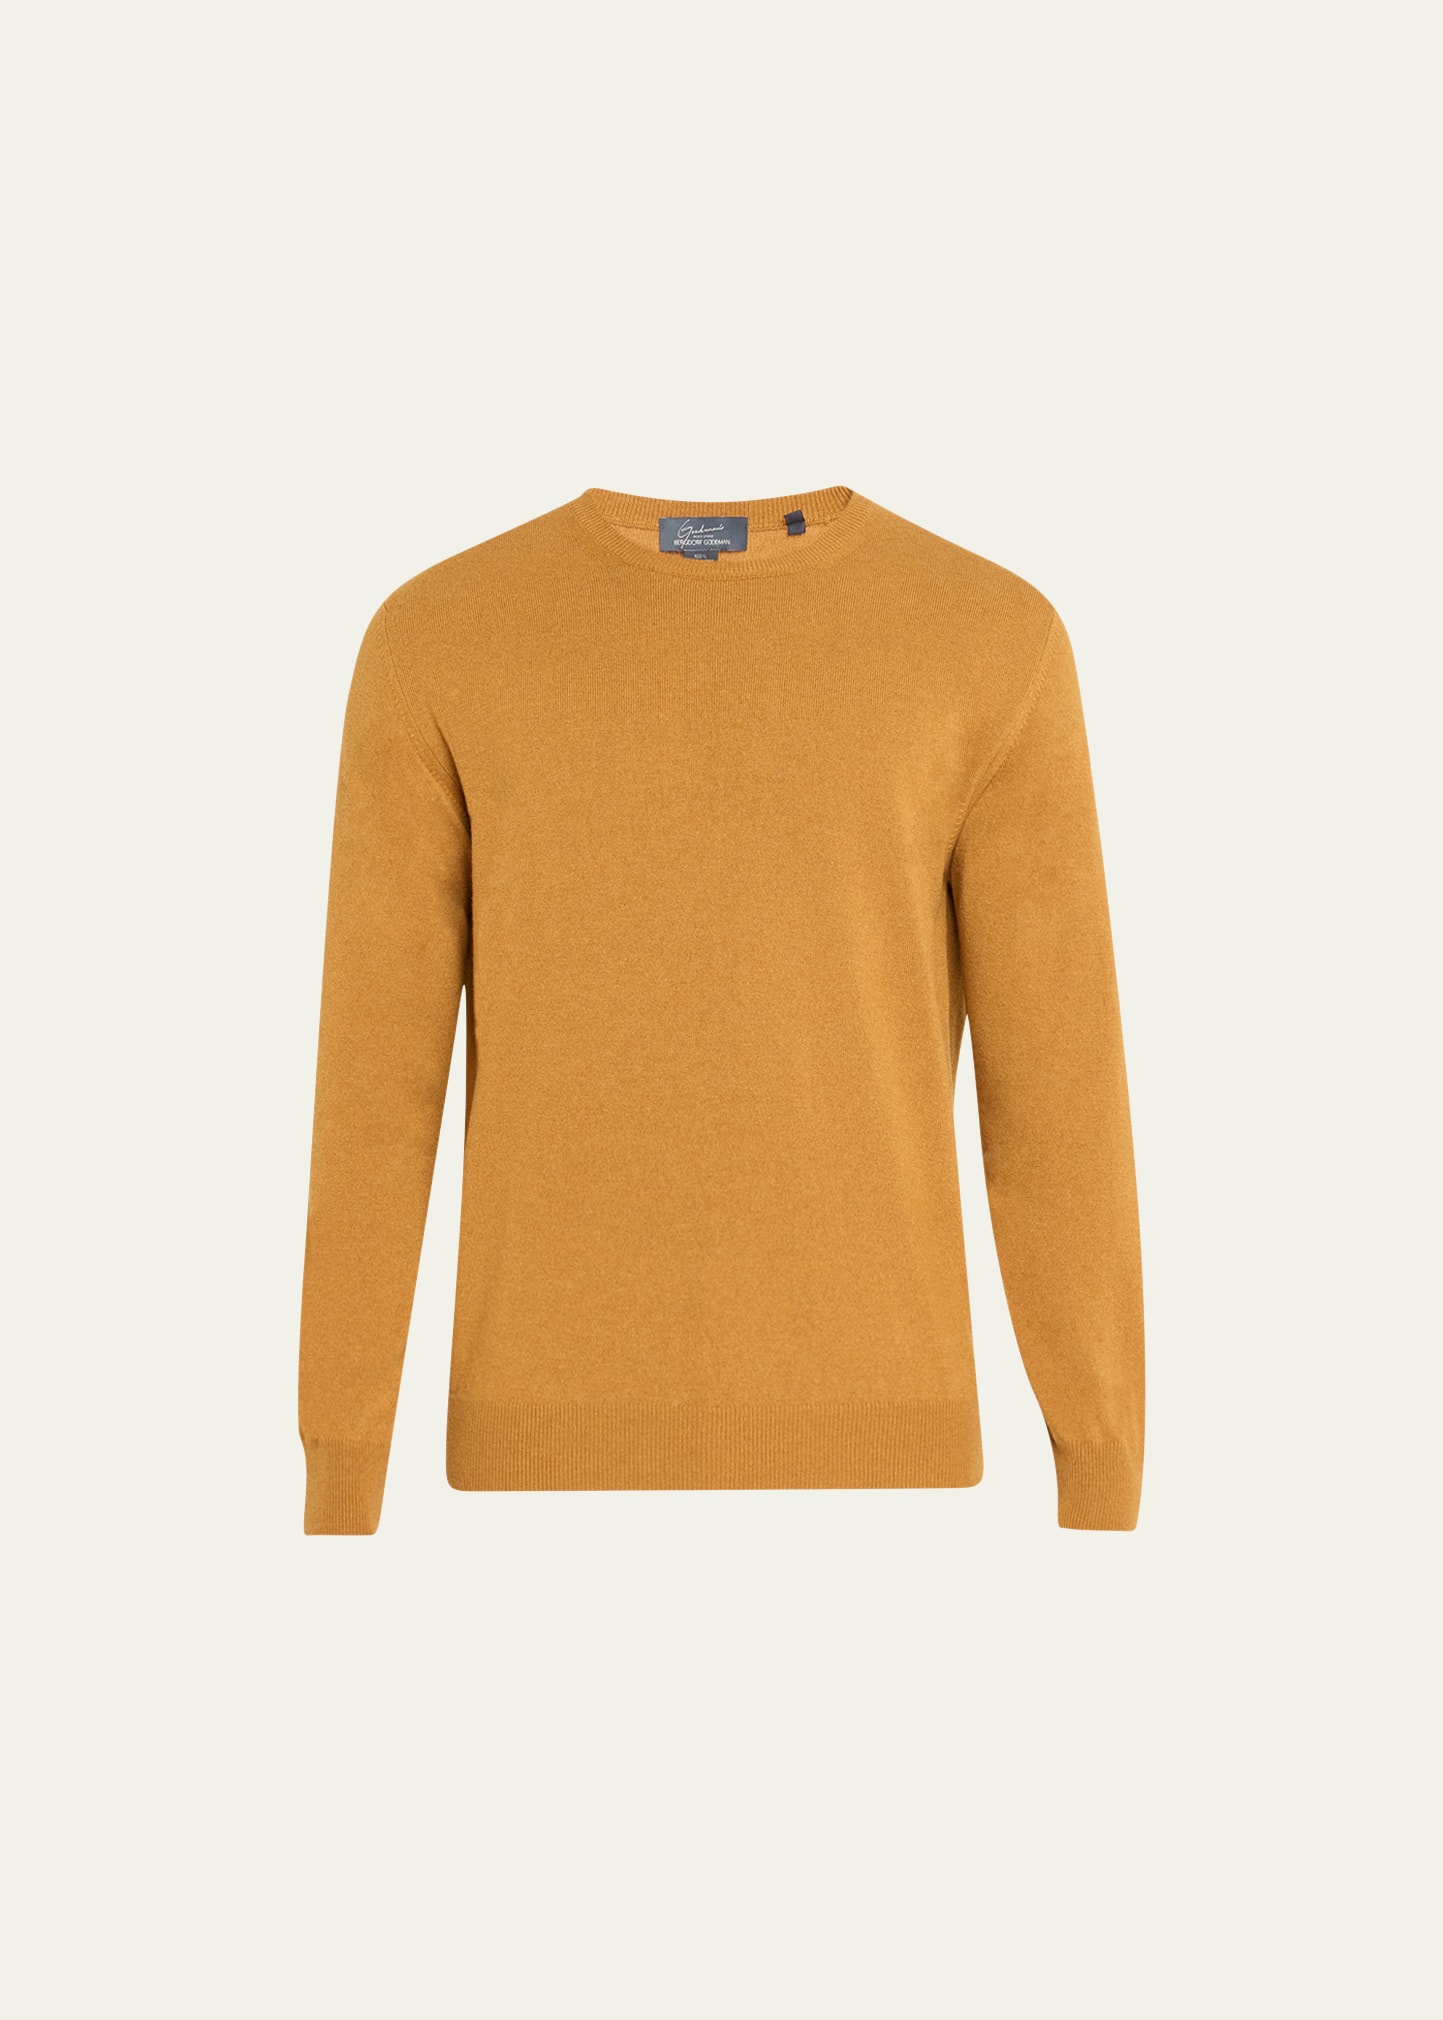 Men's Solid Cashmere Crewneck Sweater